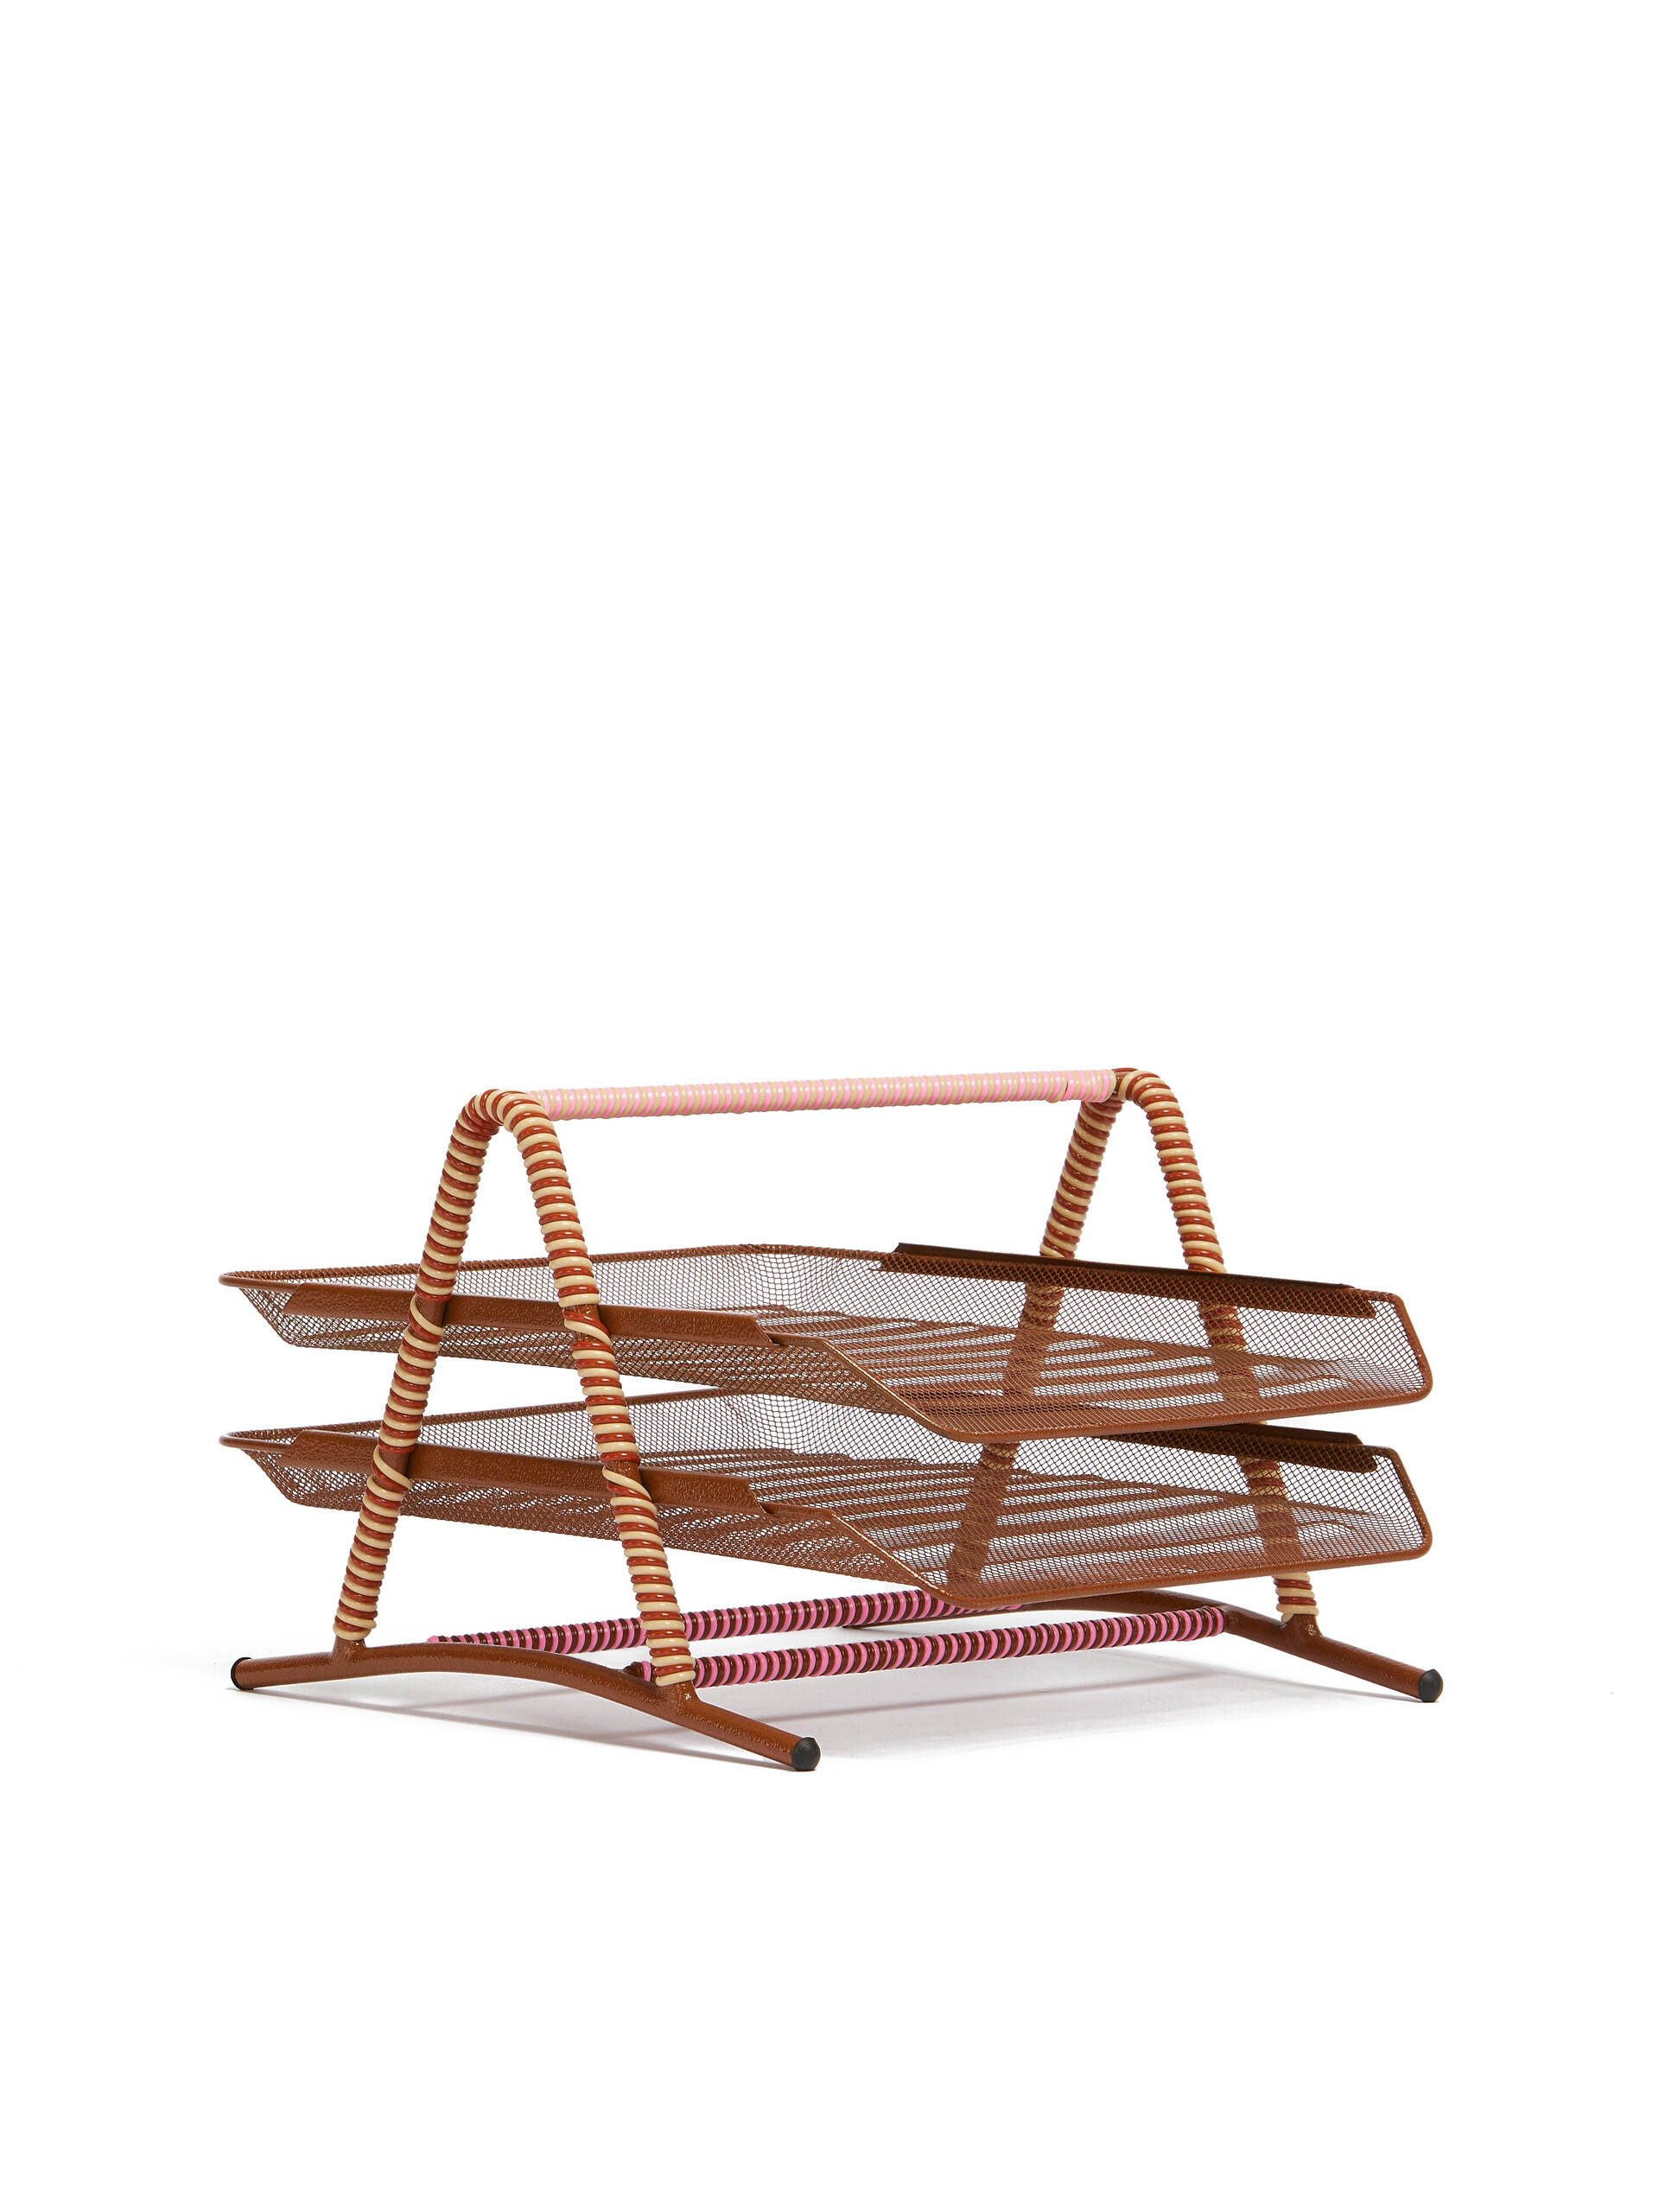 Brown Marni Market tiered filing tray - Furniture - Image 2